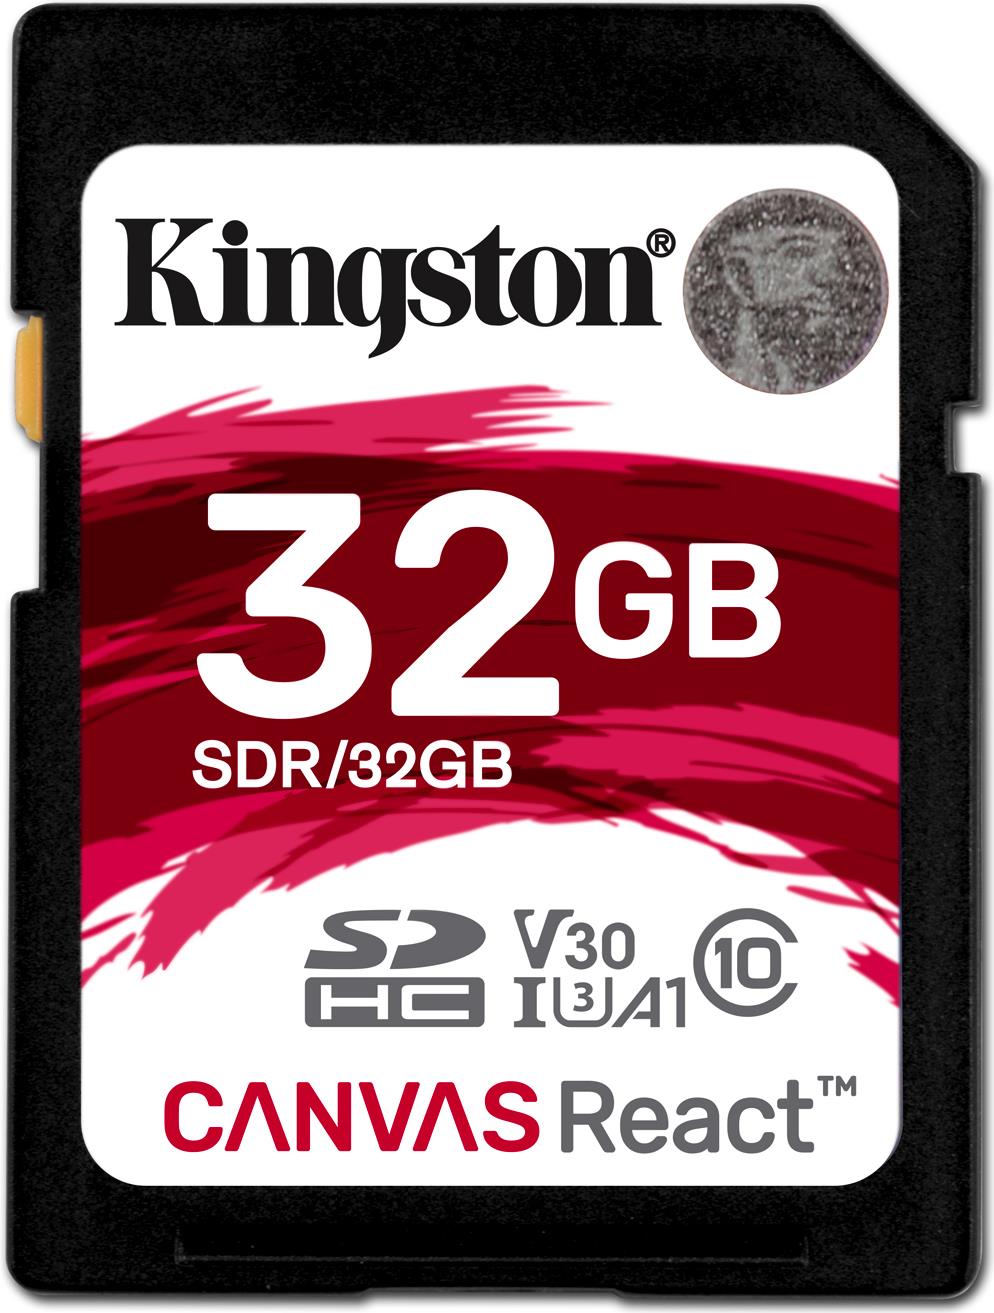 Kingston Technology SD Canvas React 32GB SDHC UHS-I Klasse 10 Speicherkarte (SDR/32GB)